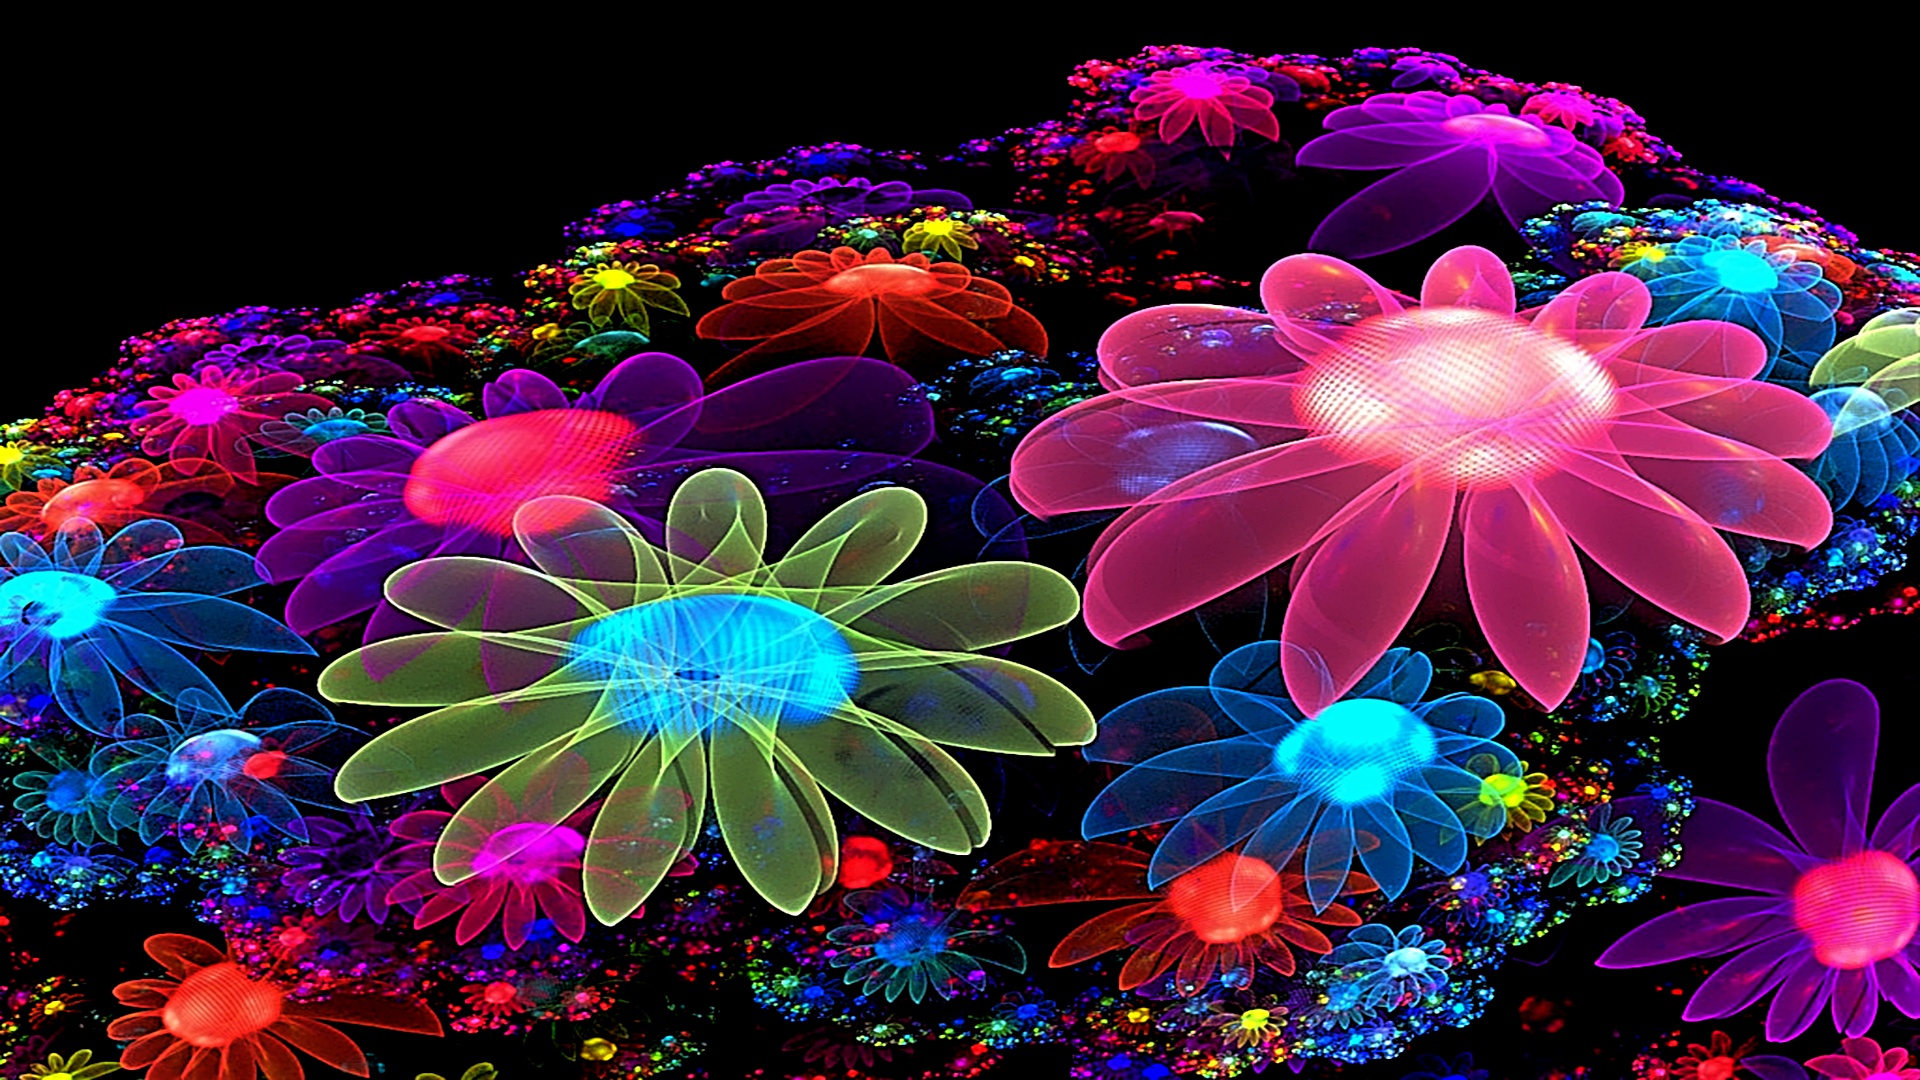 Wallpaper Of Cool Colorful Flowers Desktop